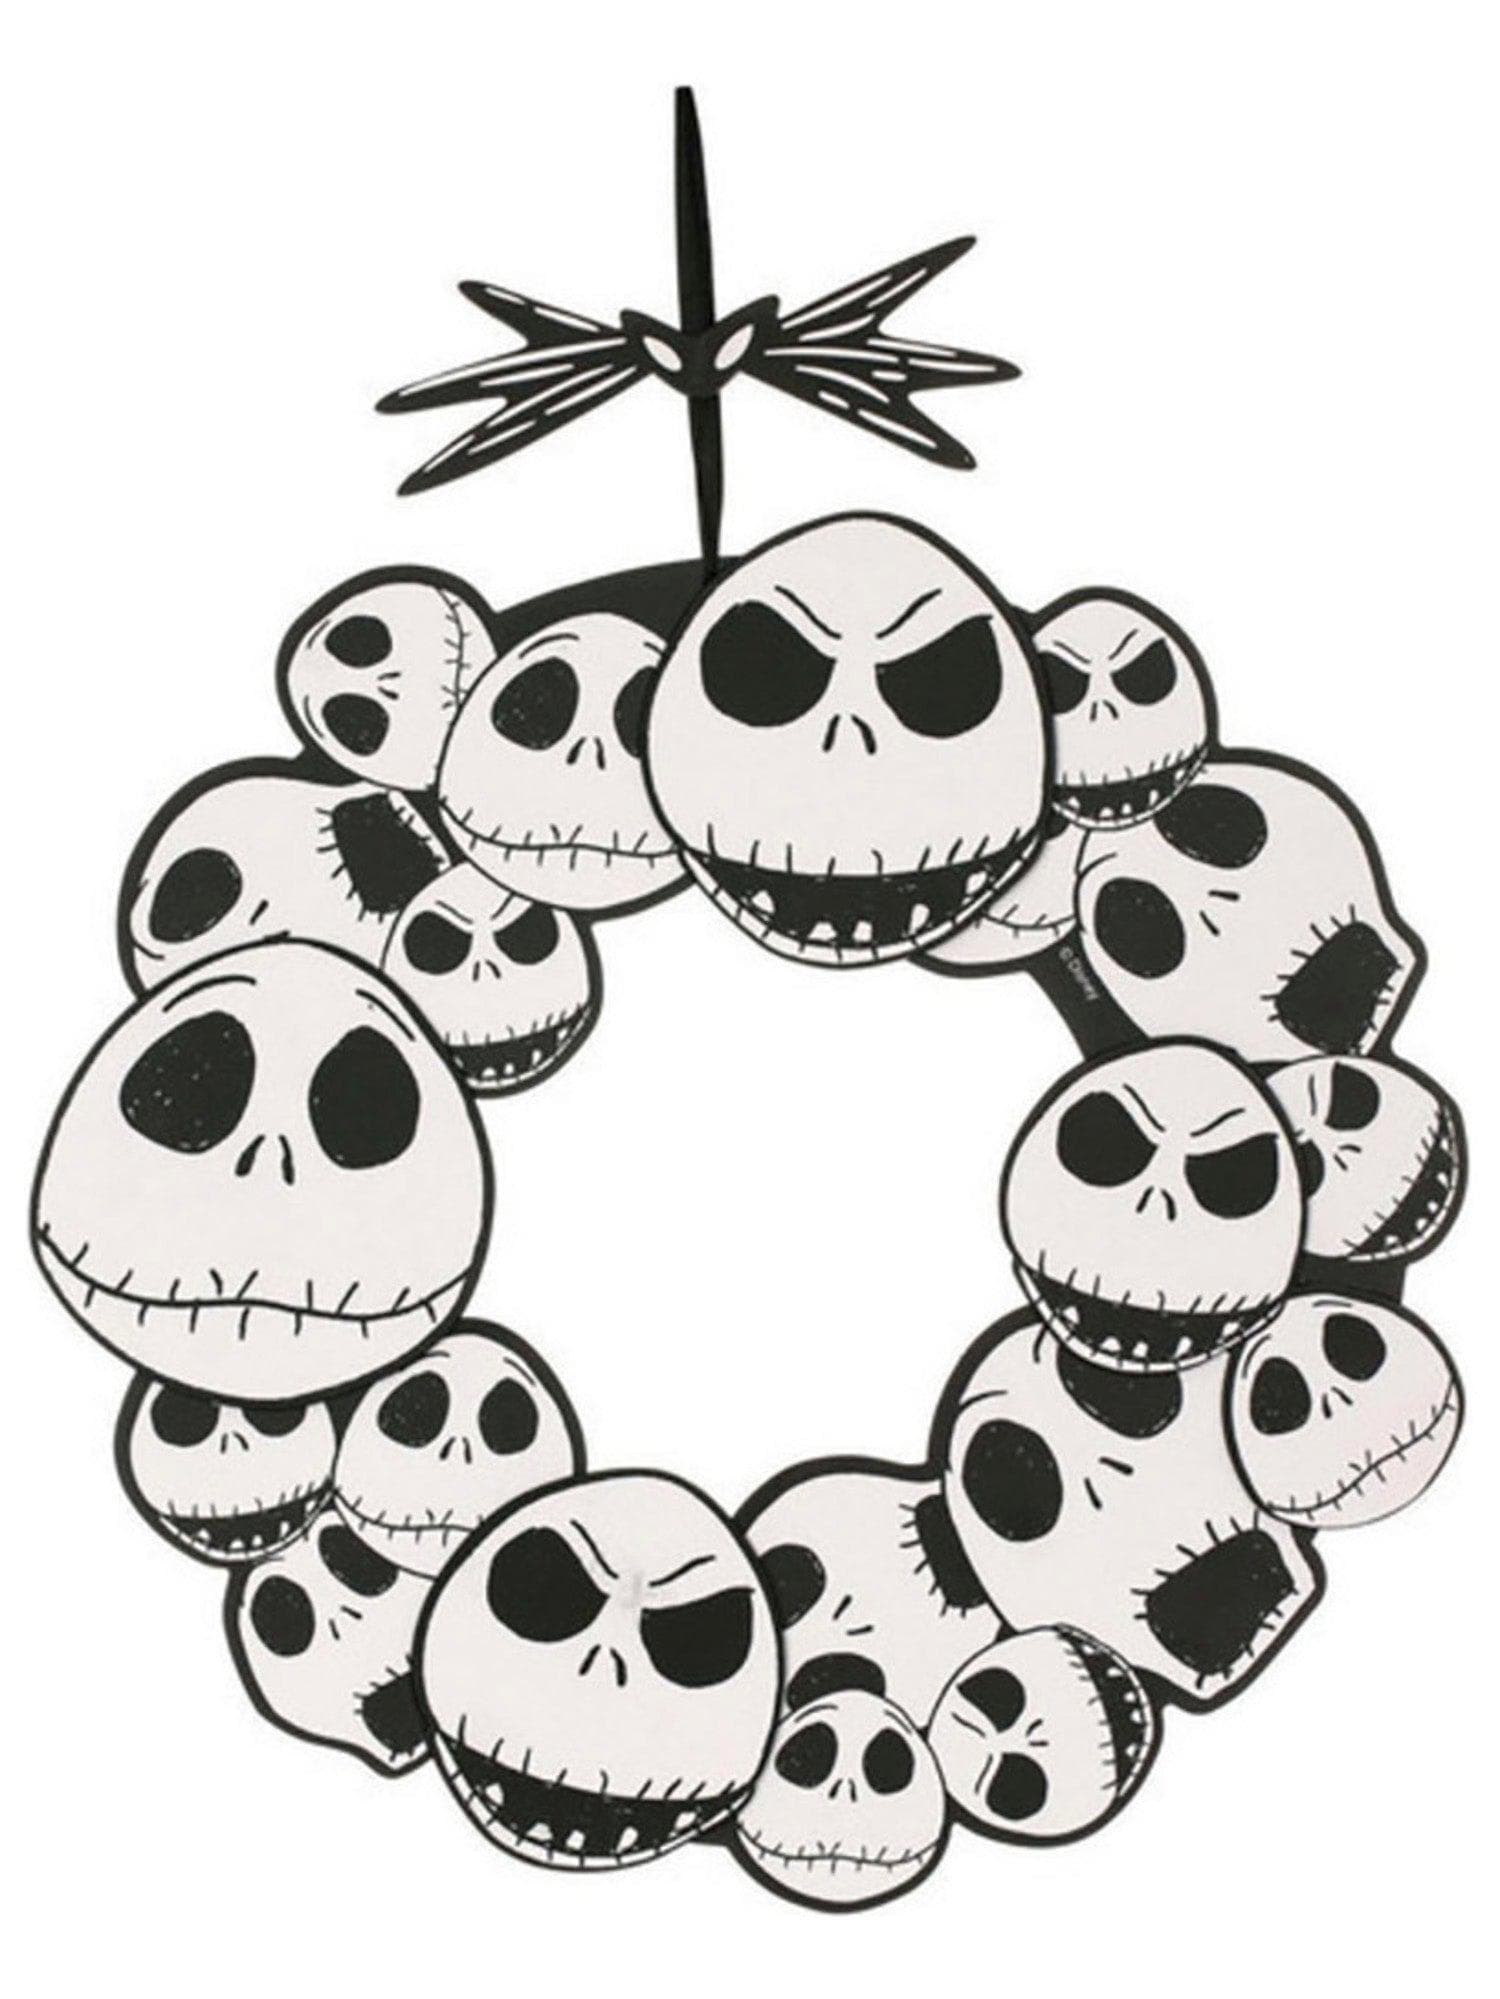 17 Inch The Nightmare Before Christmas Jack Skellington Wreath Window Wall Decor - costumes.com